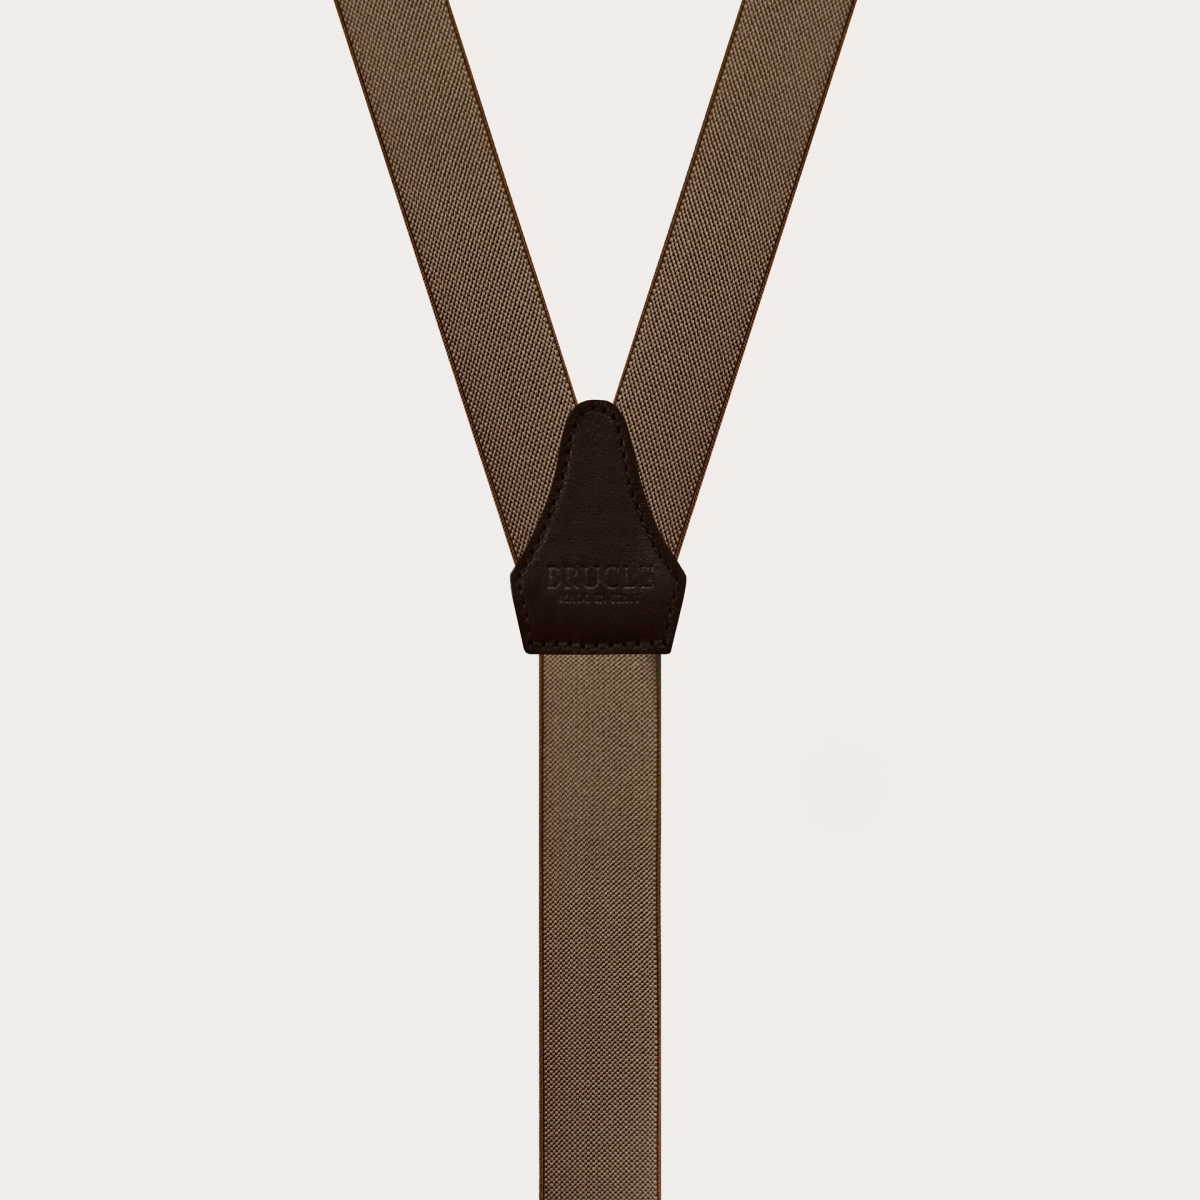 Bretelles fines brun, forme Y